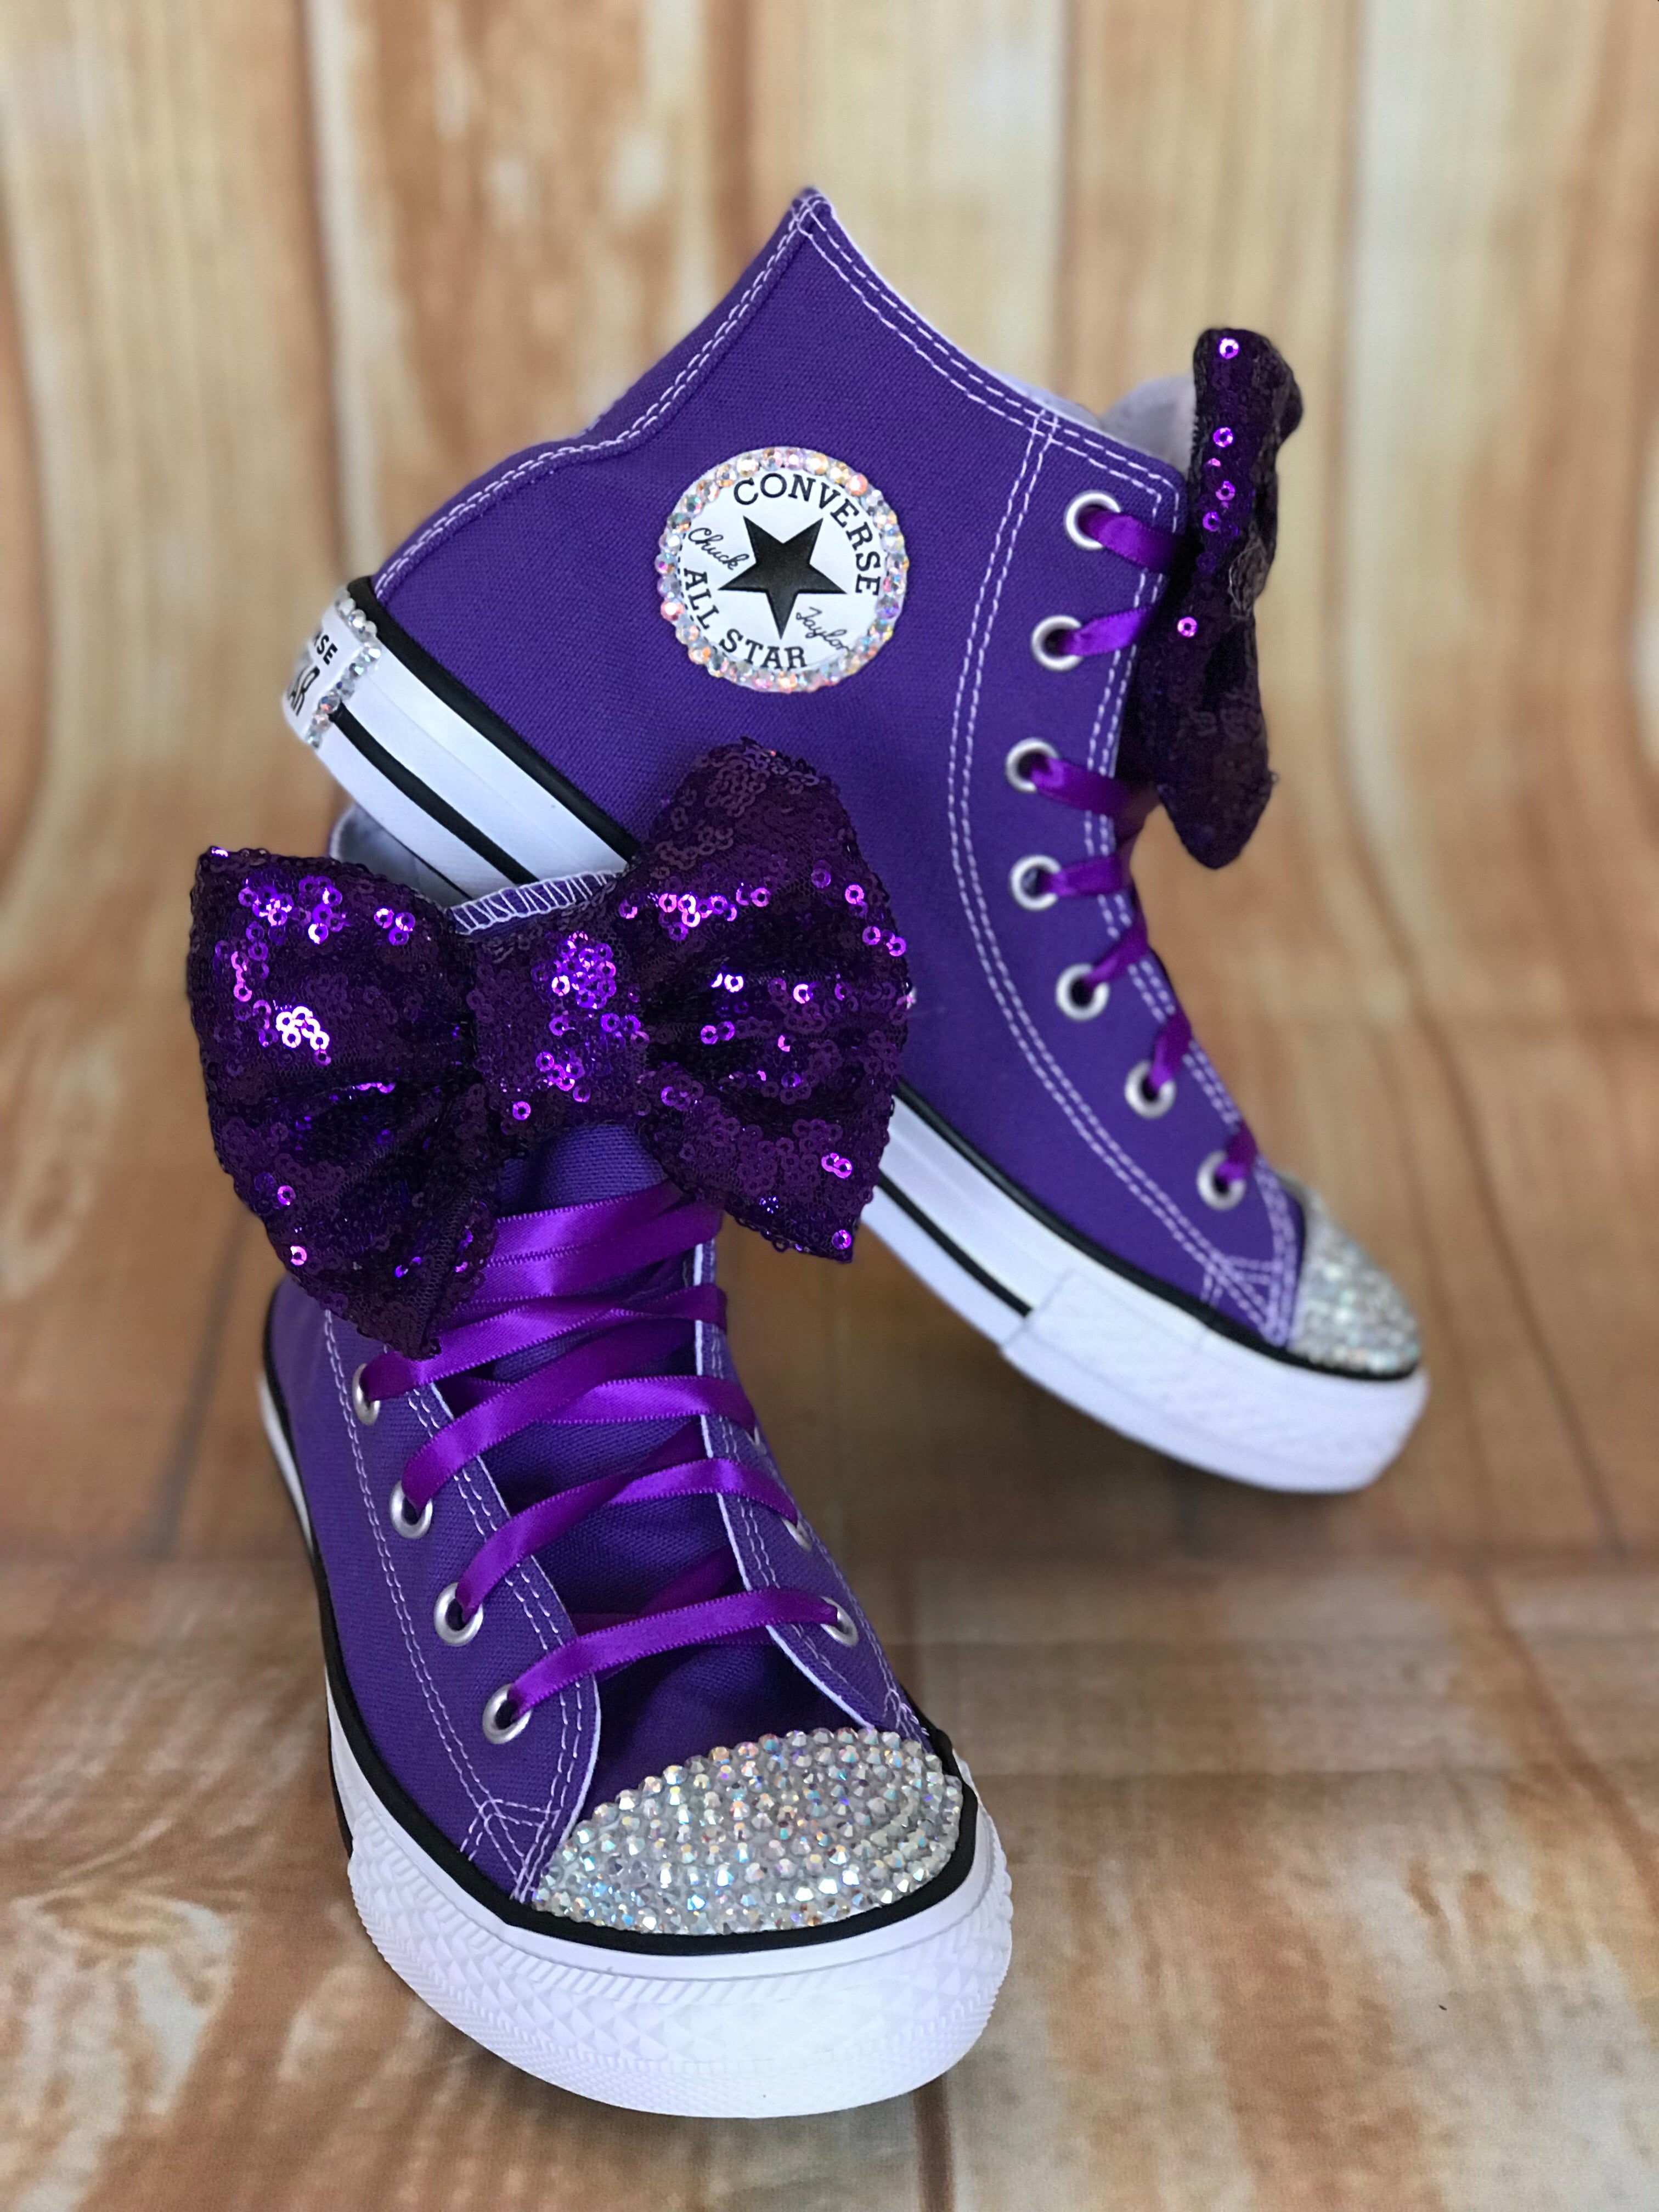 Een trouwe Shipley Proberen Purple Touch of Bling Converse Sneakers, Little Kids Shoe Size 11-3 |  Little Ladybug Tutus